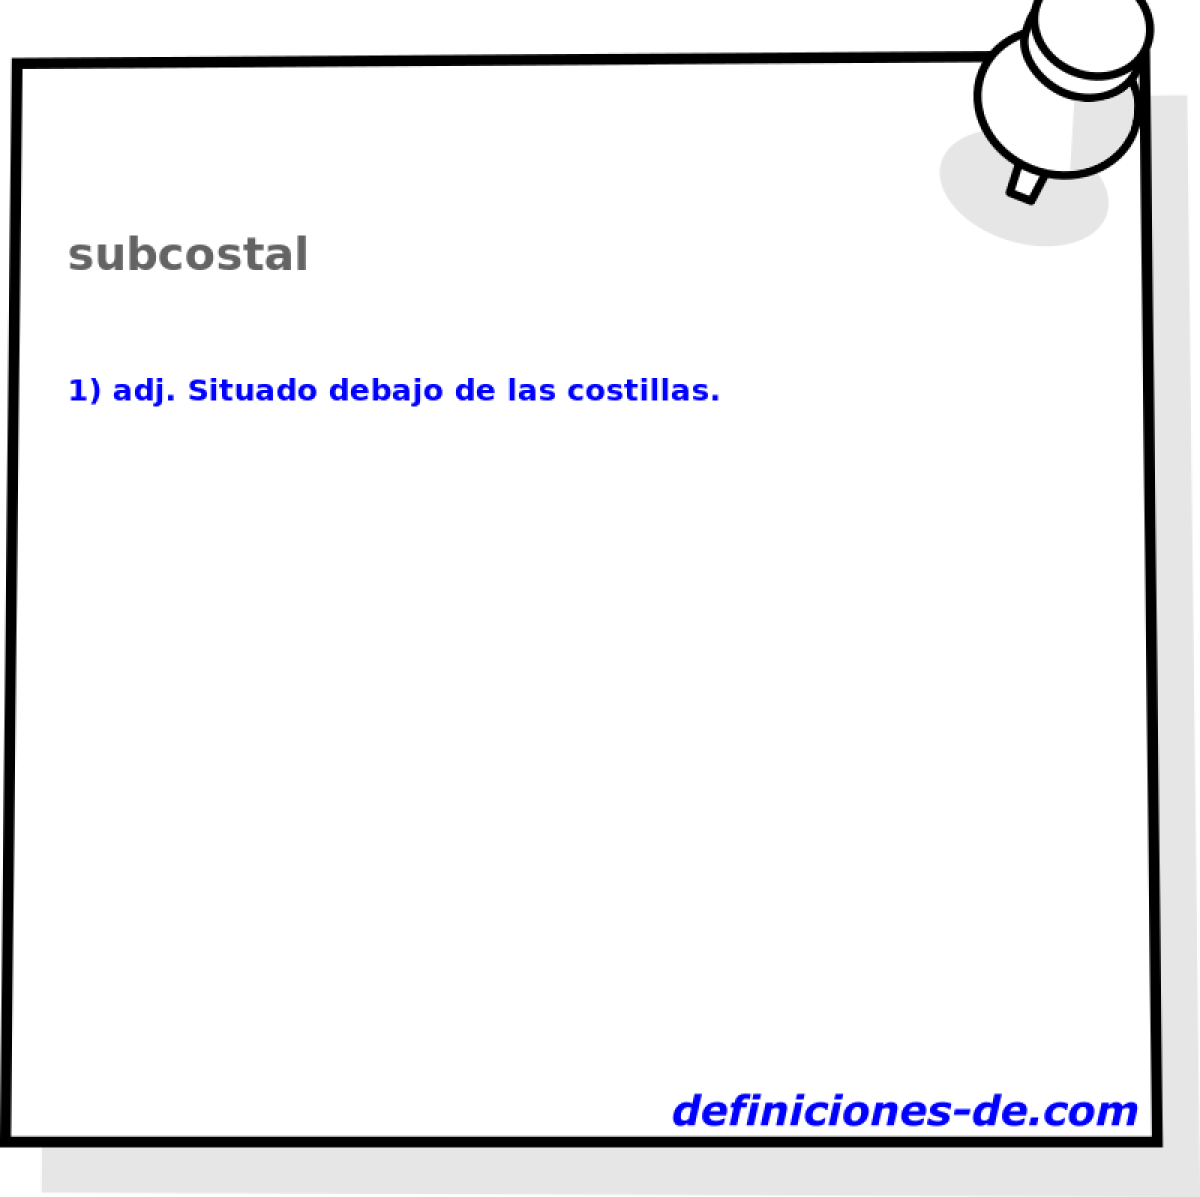 subcostal 